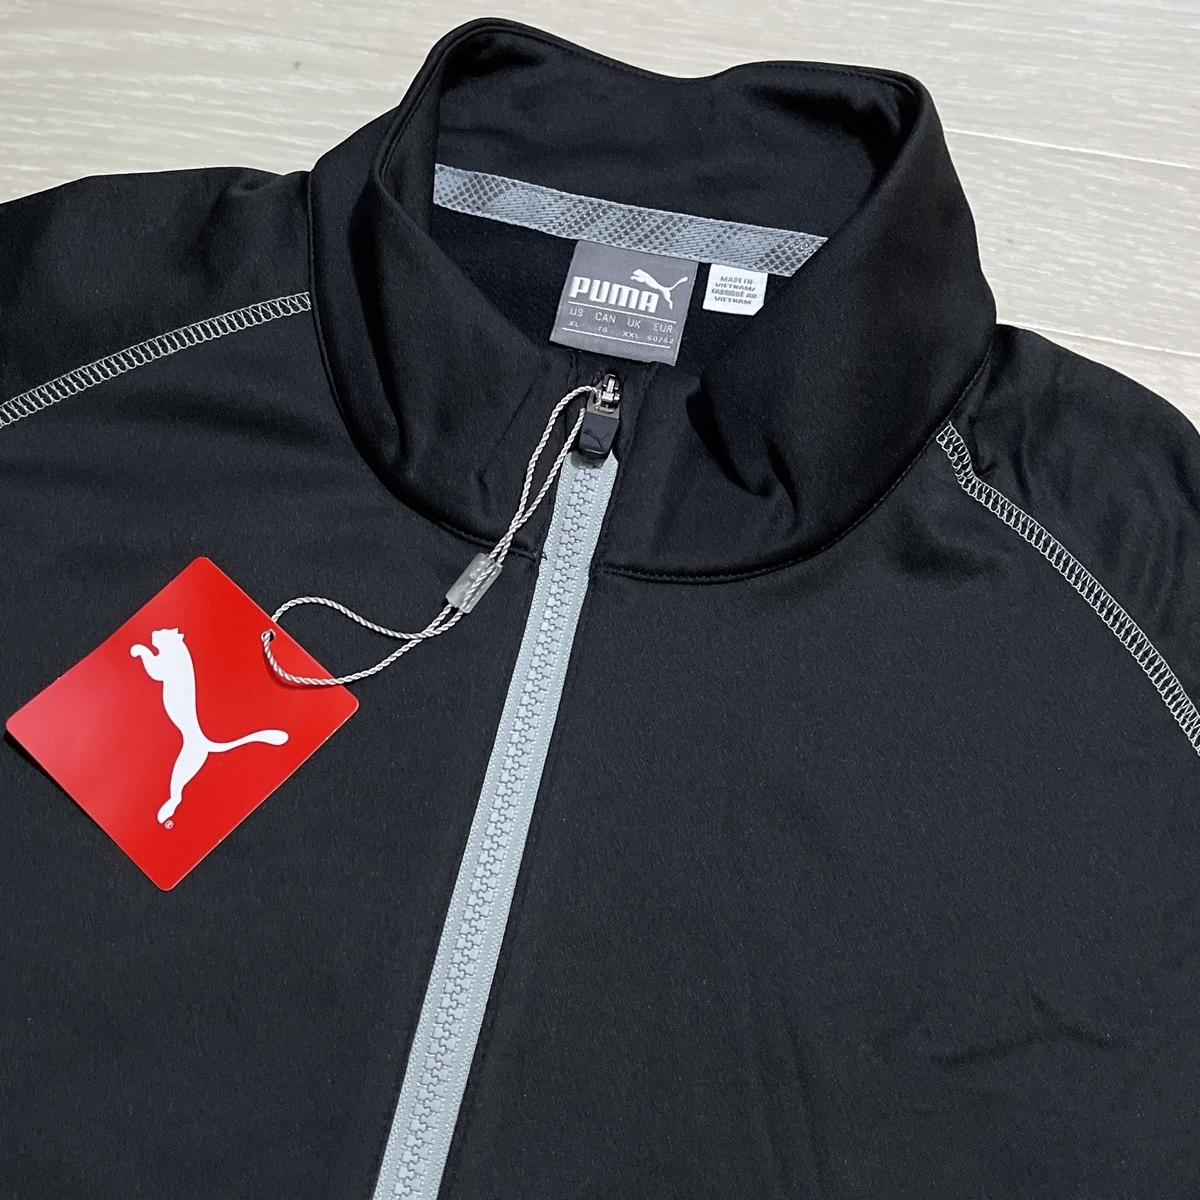  Puma Golf *USXL( japanese 3L-4L rank ) full Zip * jacket / fleece / outer garment / long sleeve / autumn winter / black * direct import *PUMA black * large size * free shipping 